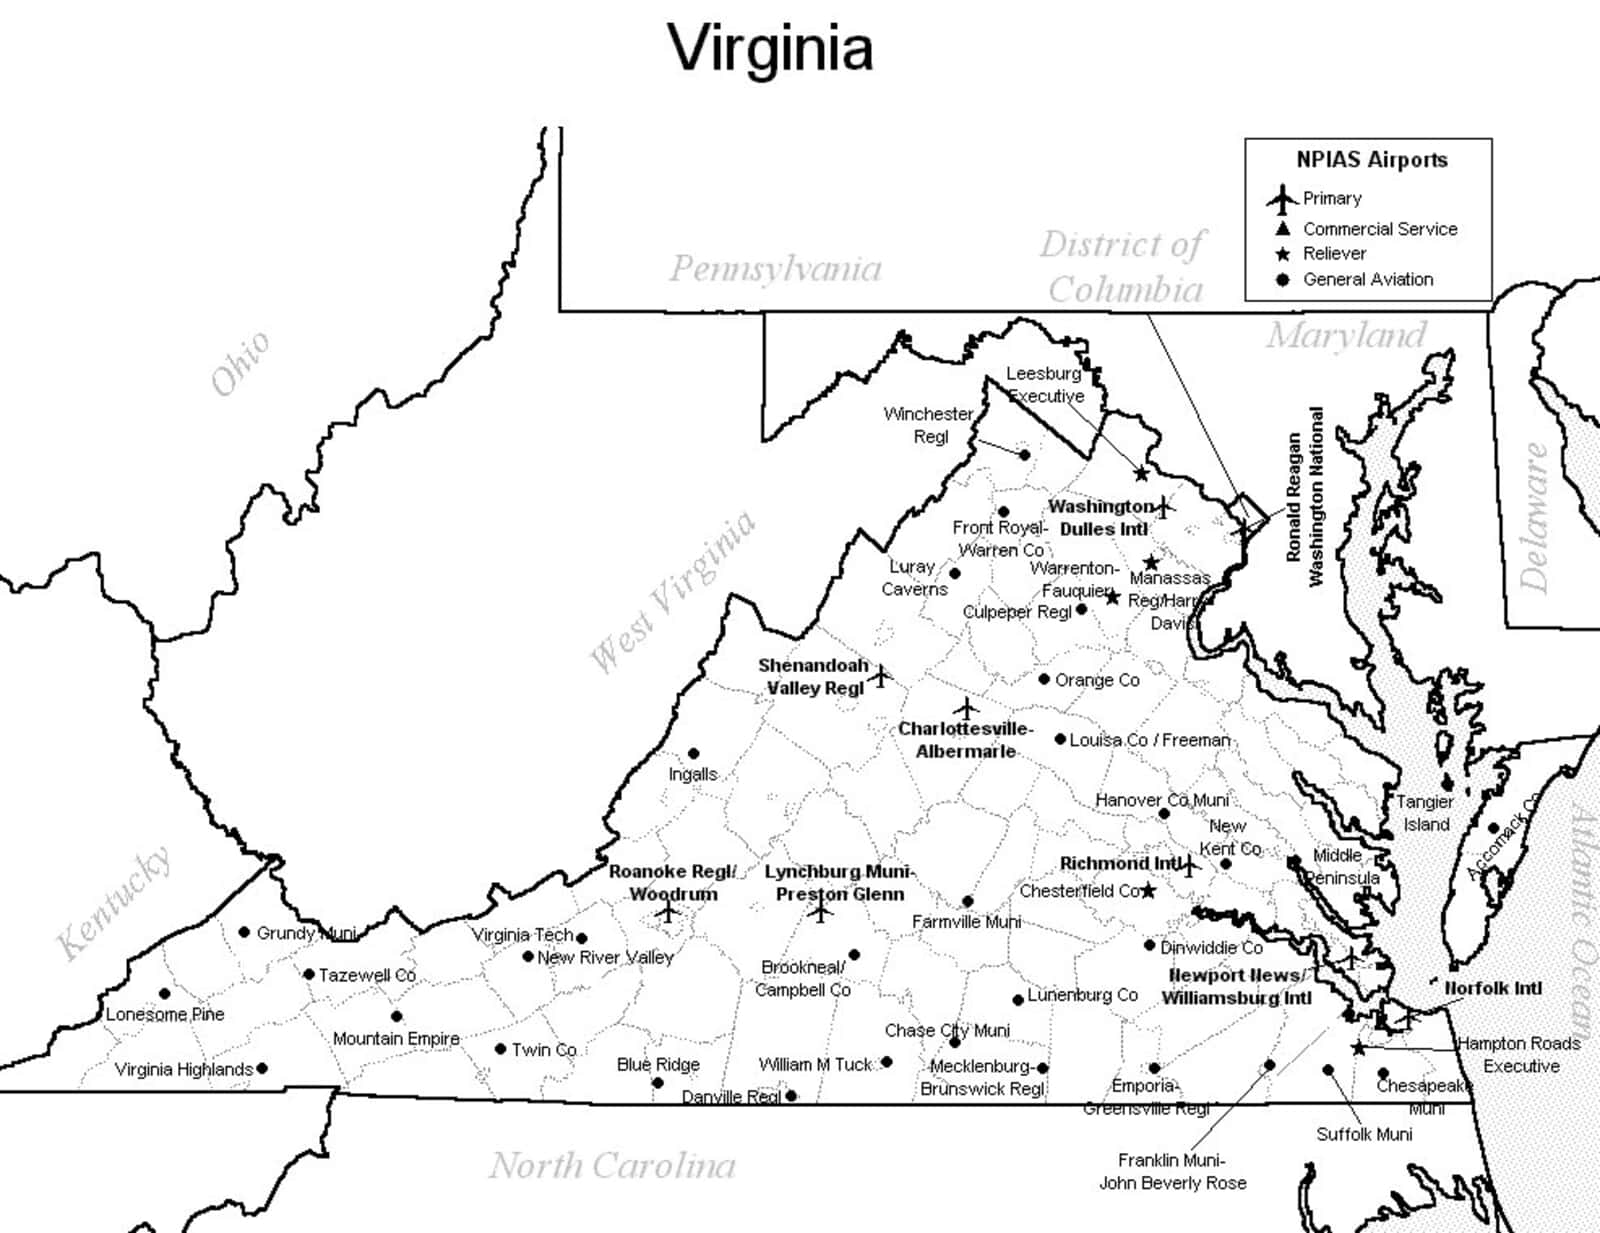 Virginia Airport Map Virginia Airports